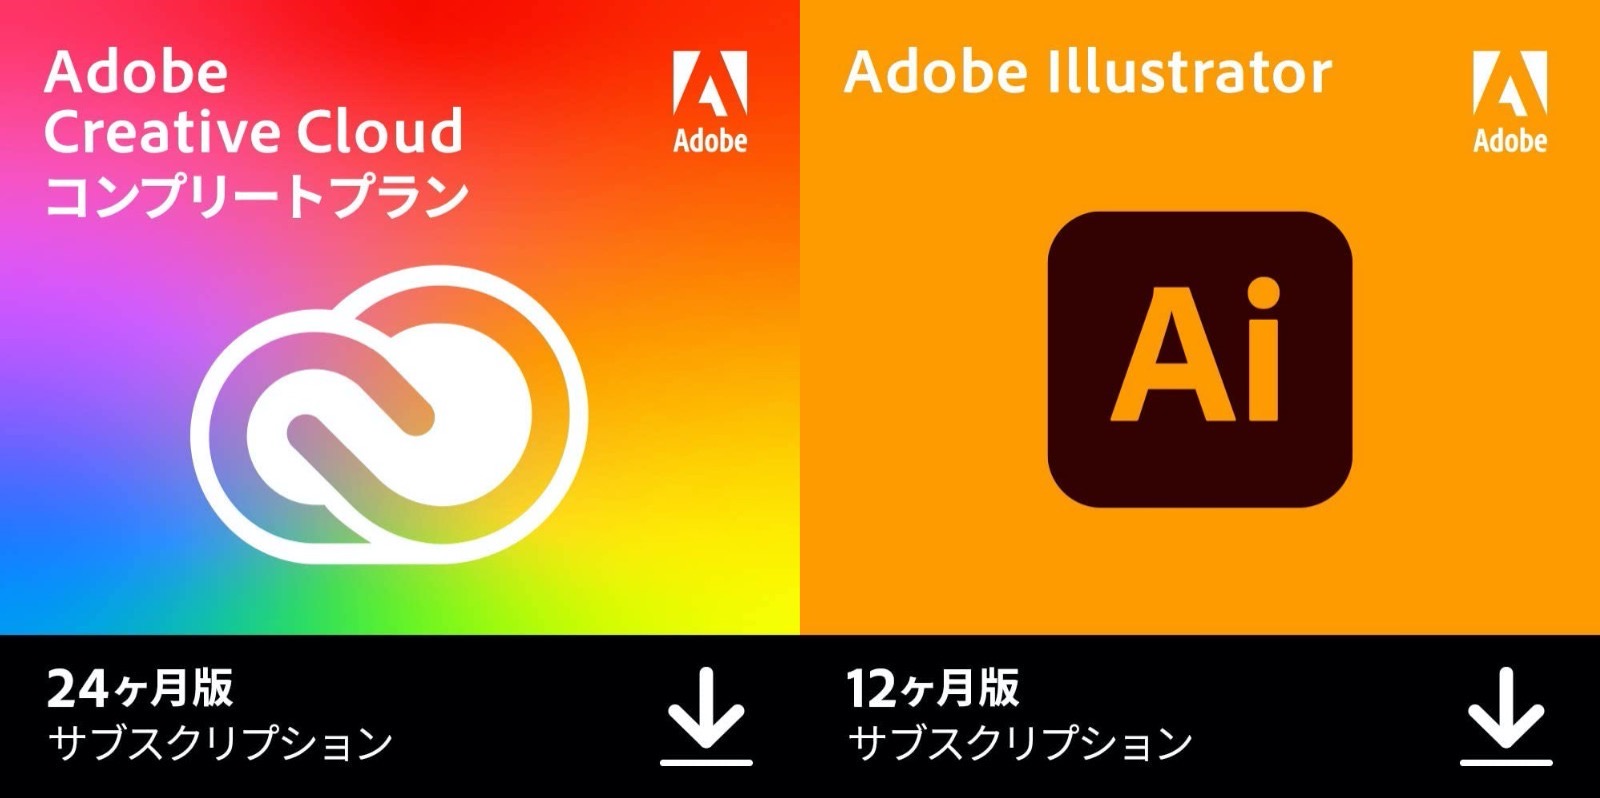 Adobe-CC-mega-sale.jpg